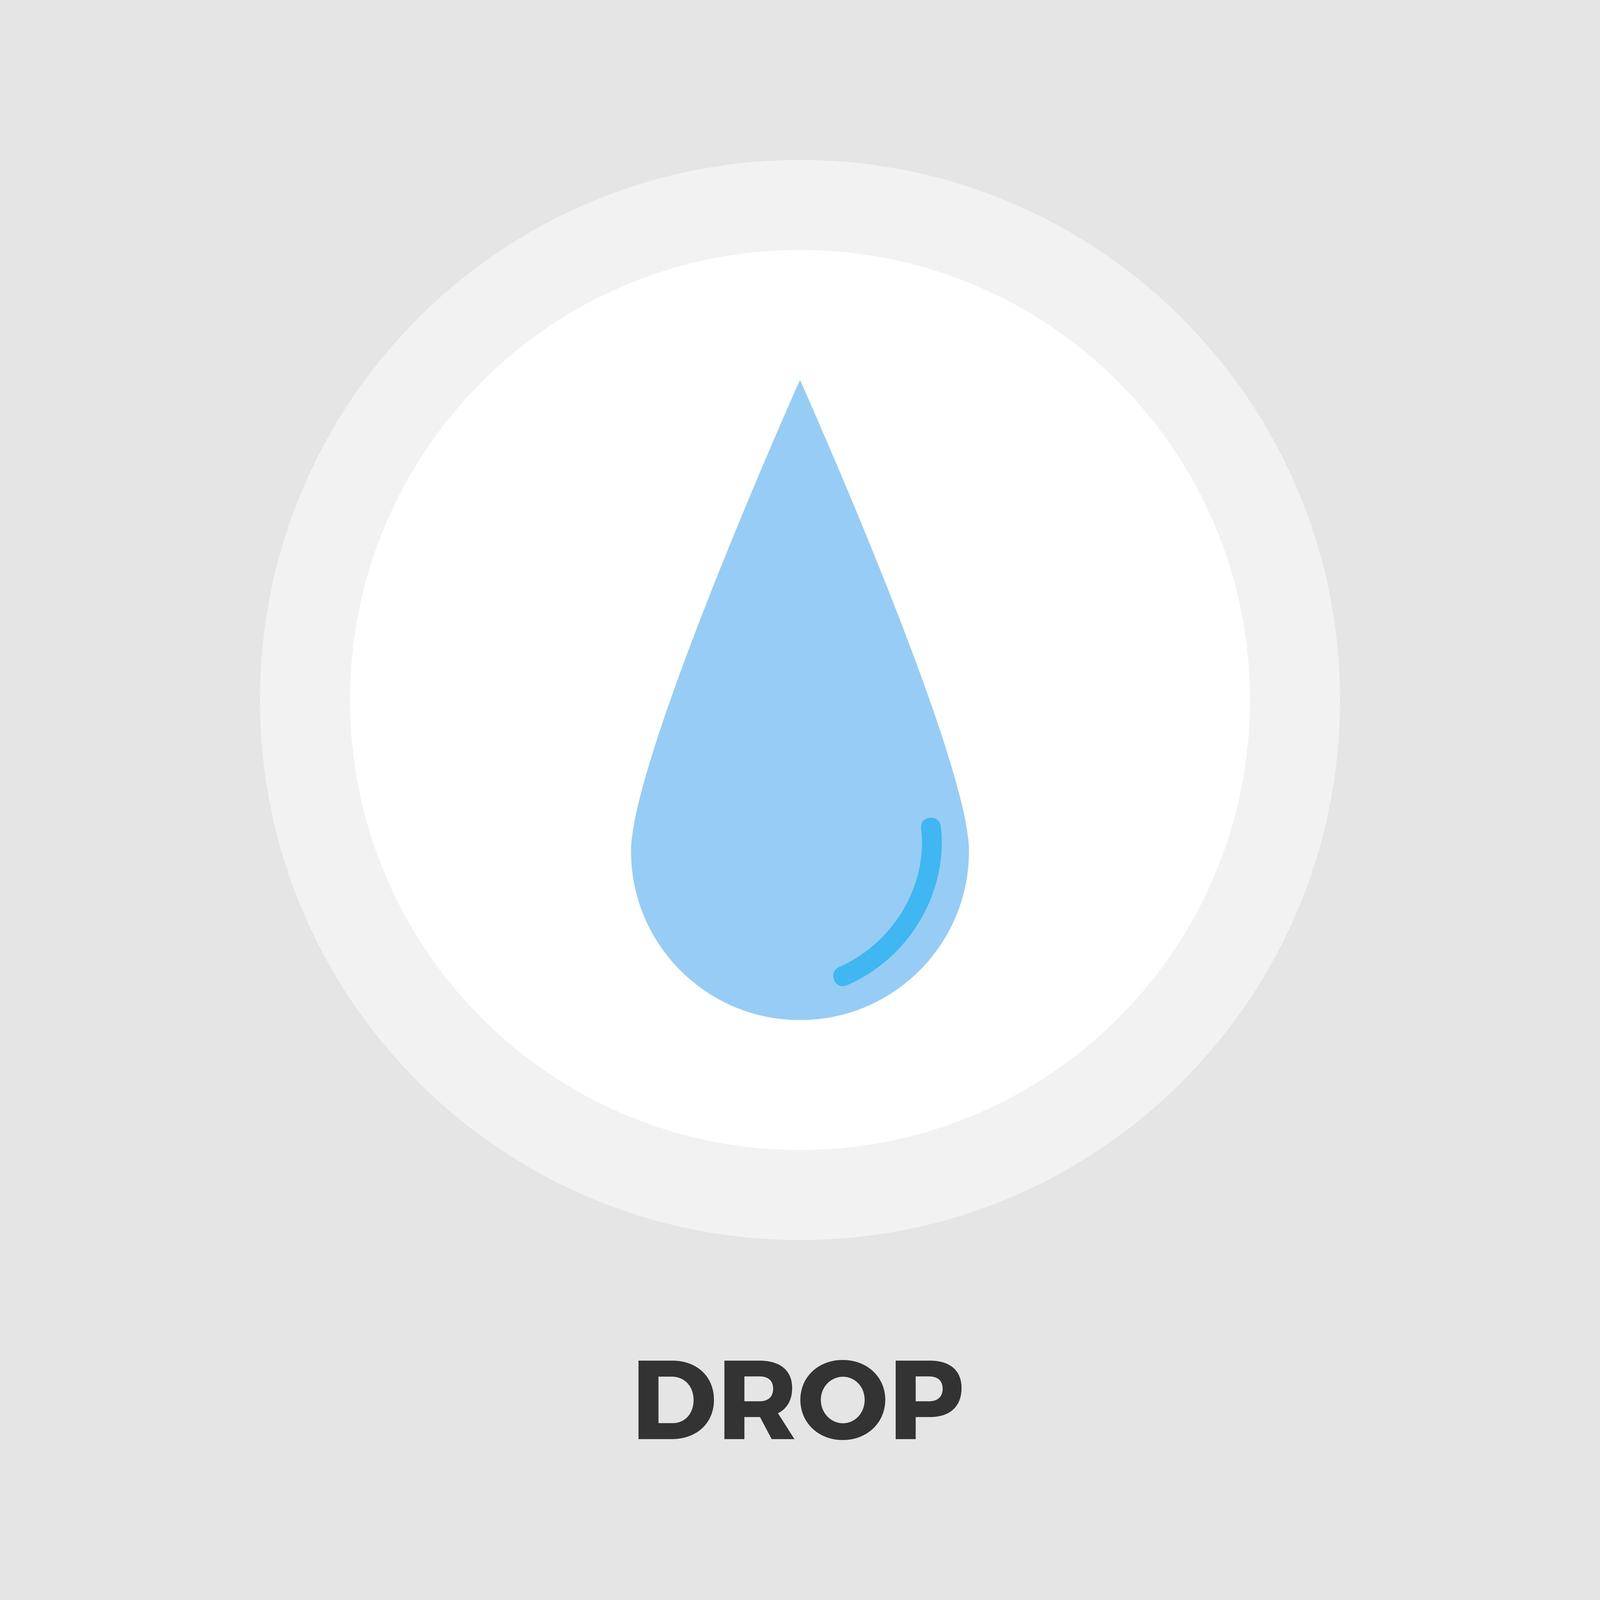 Drop flat icon by smoki